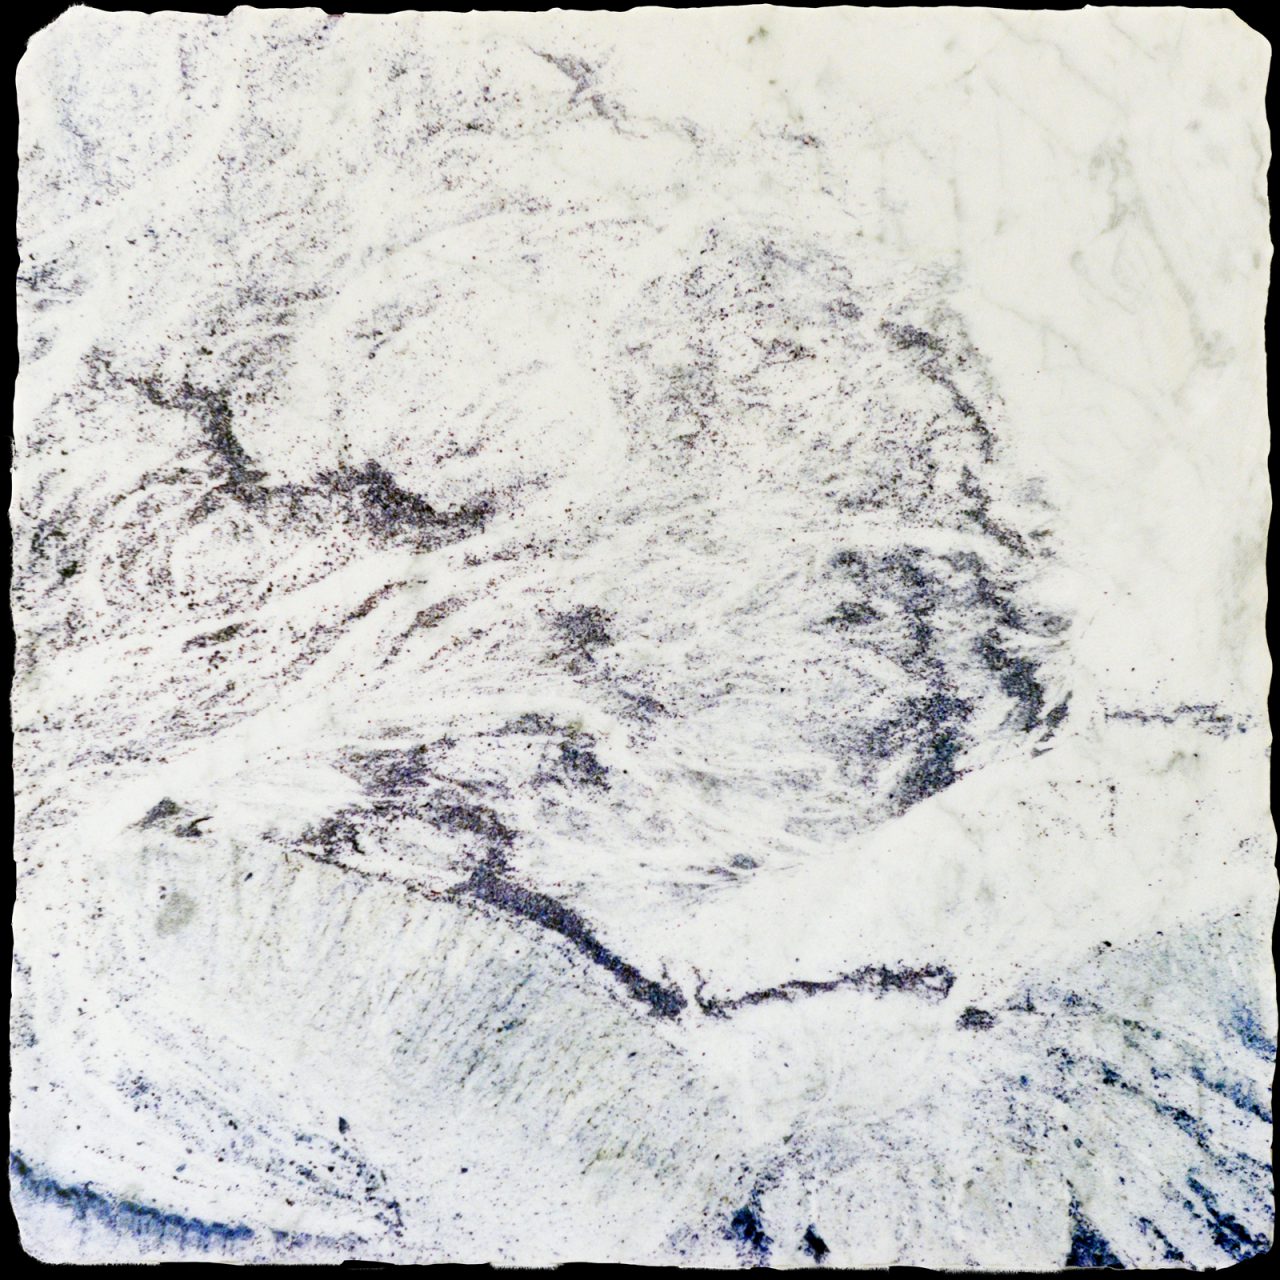 Toxic Craters VII, Indonesia 2019, laser prints on Italian Carrara marble, 60,5 x 59 cm